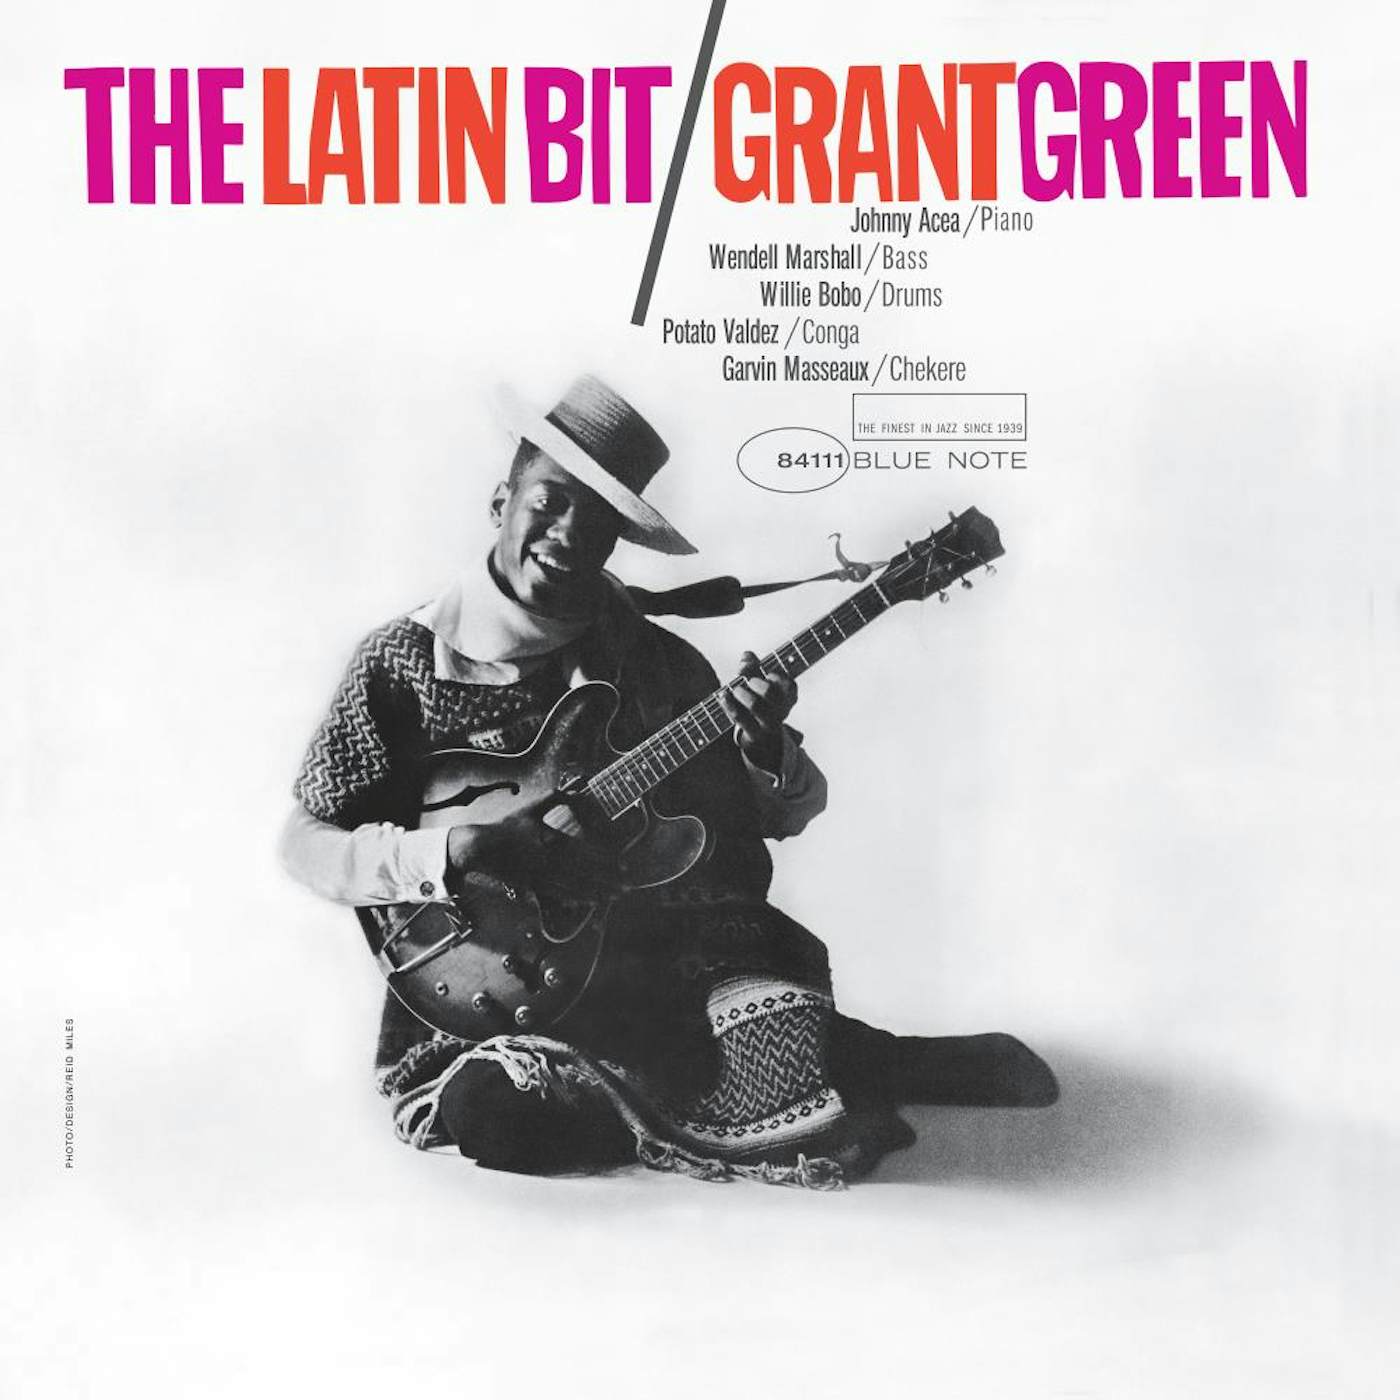 Grant Green LATIN BIT (BLUE NOTE TONE POET SERIES) Vinyl Record